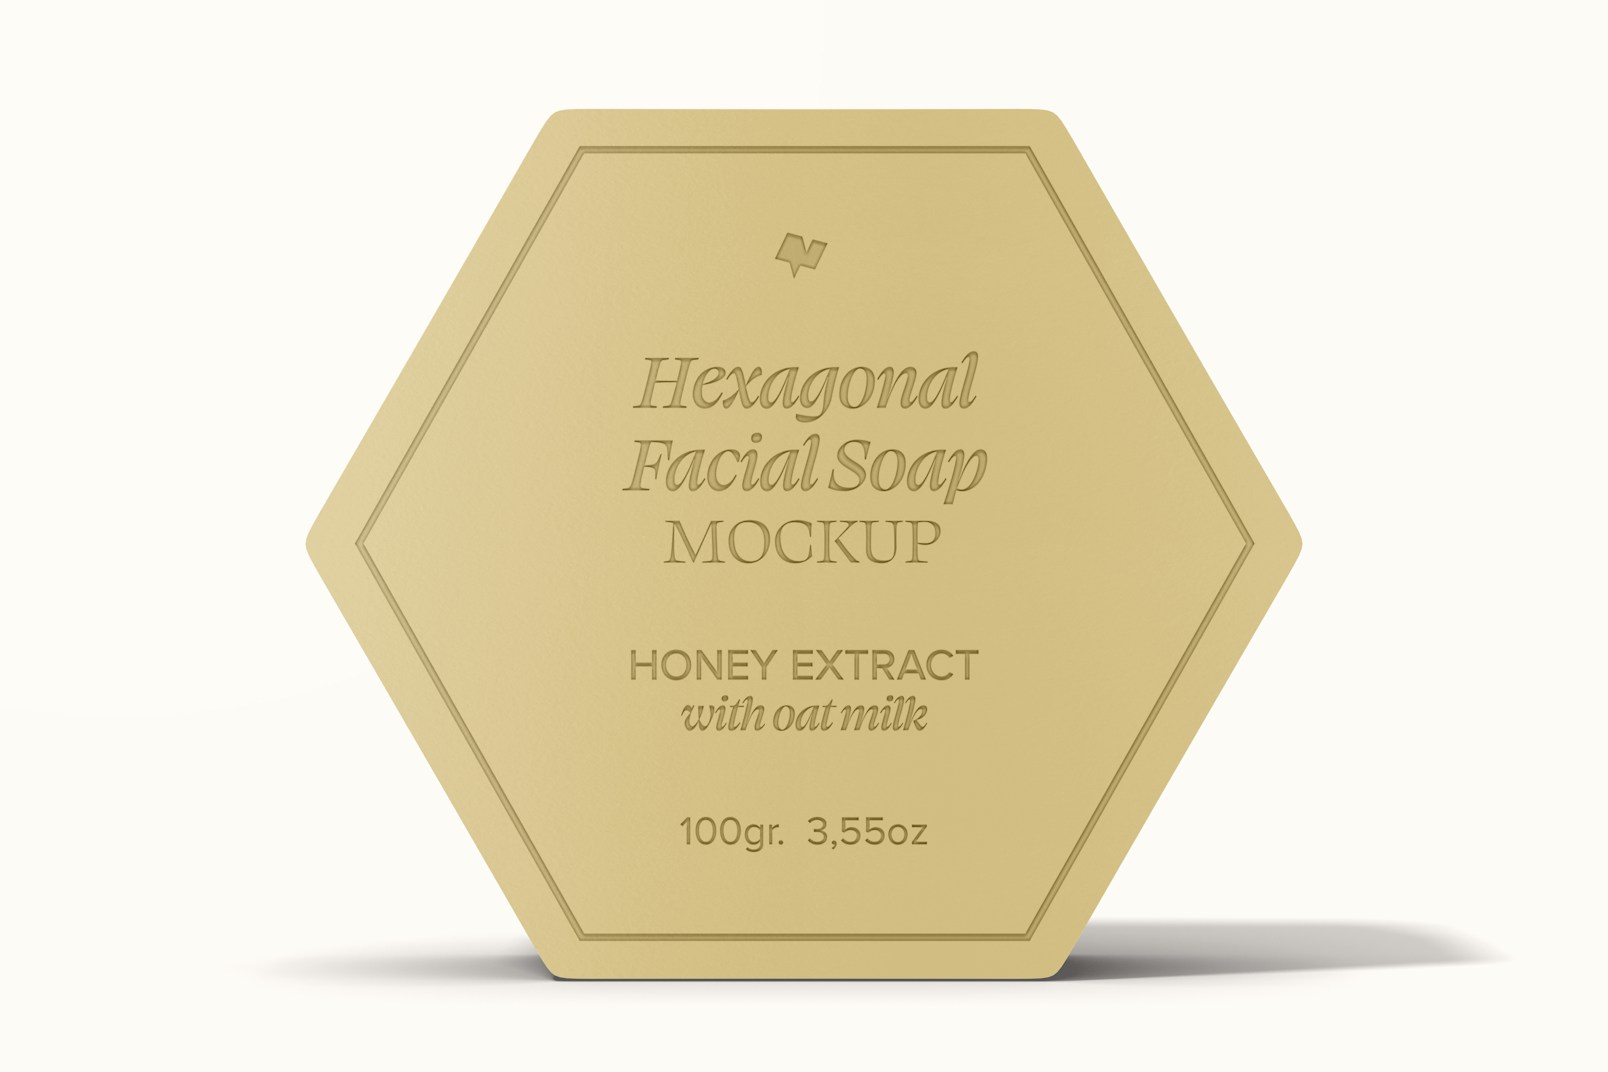 Hexagonal Facial Soap Mockup, Front View